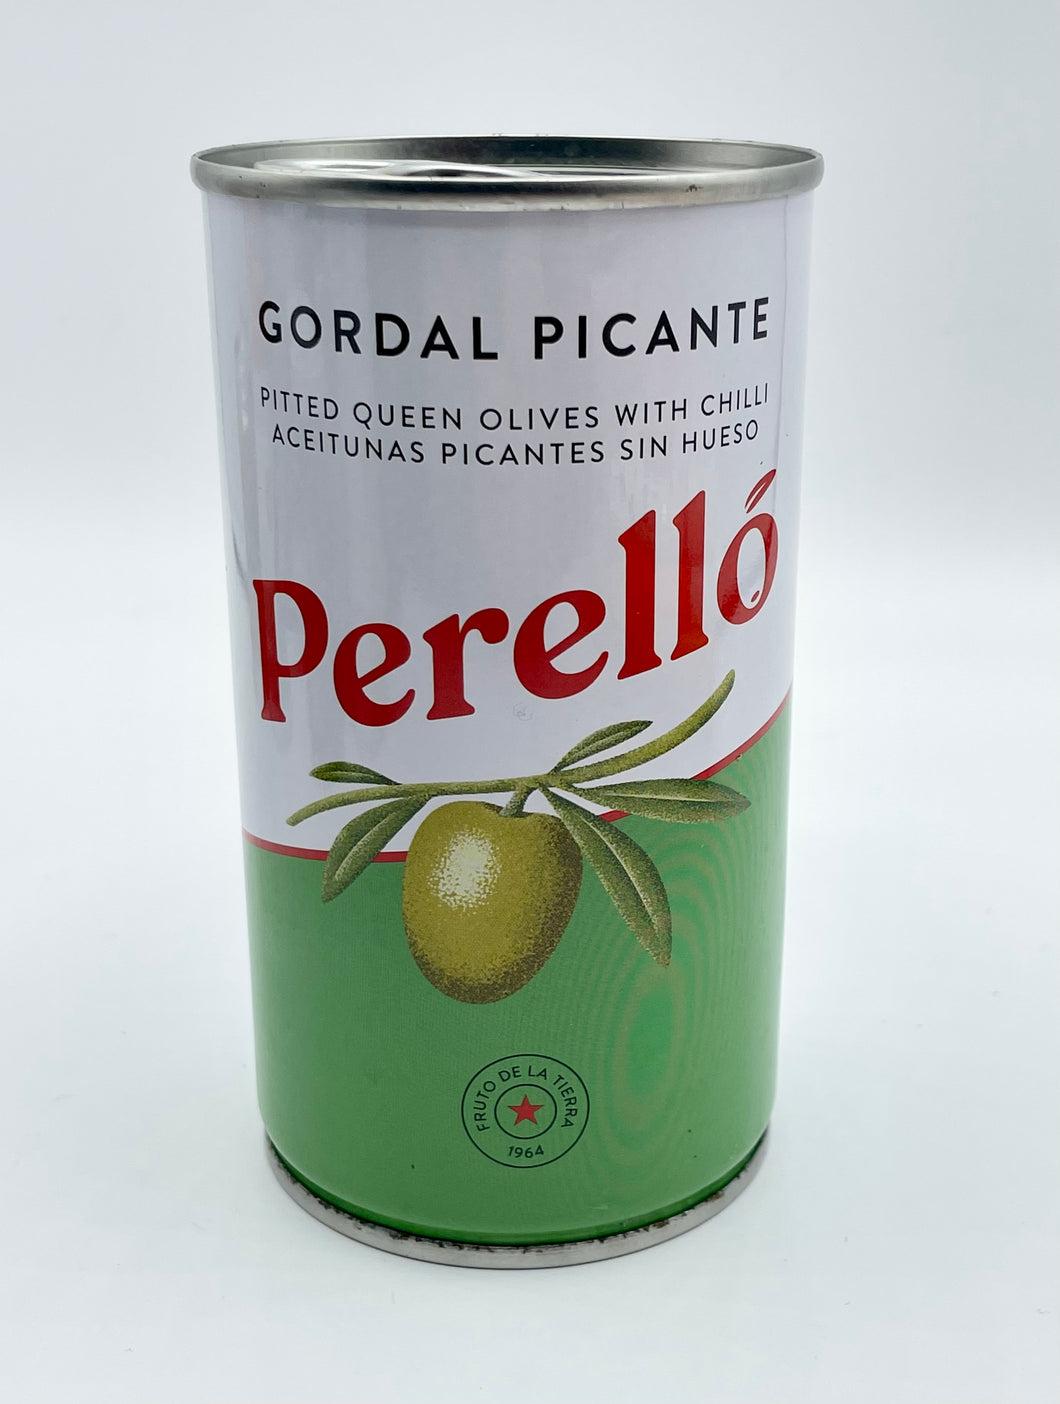 Gordal pitted olives